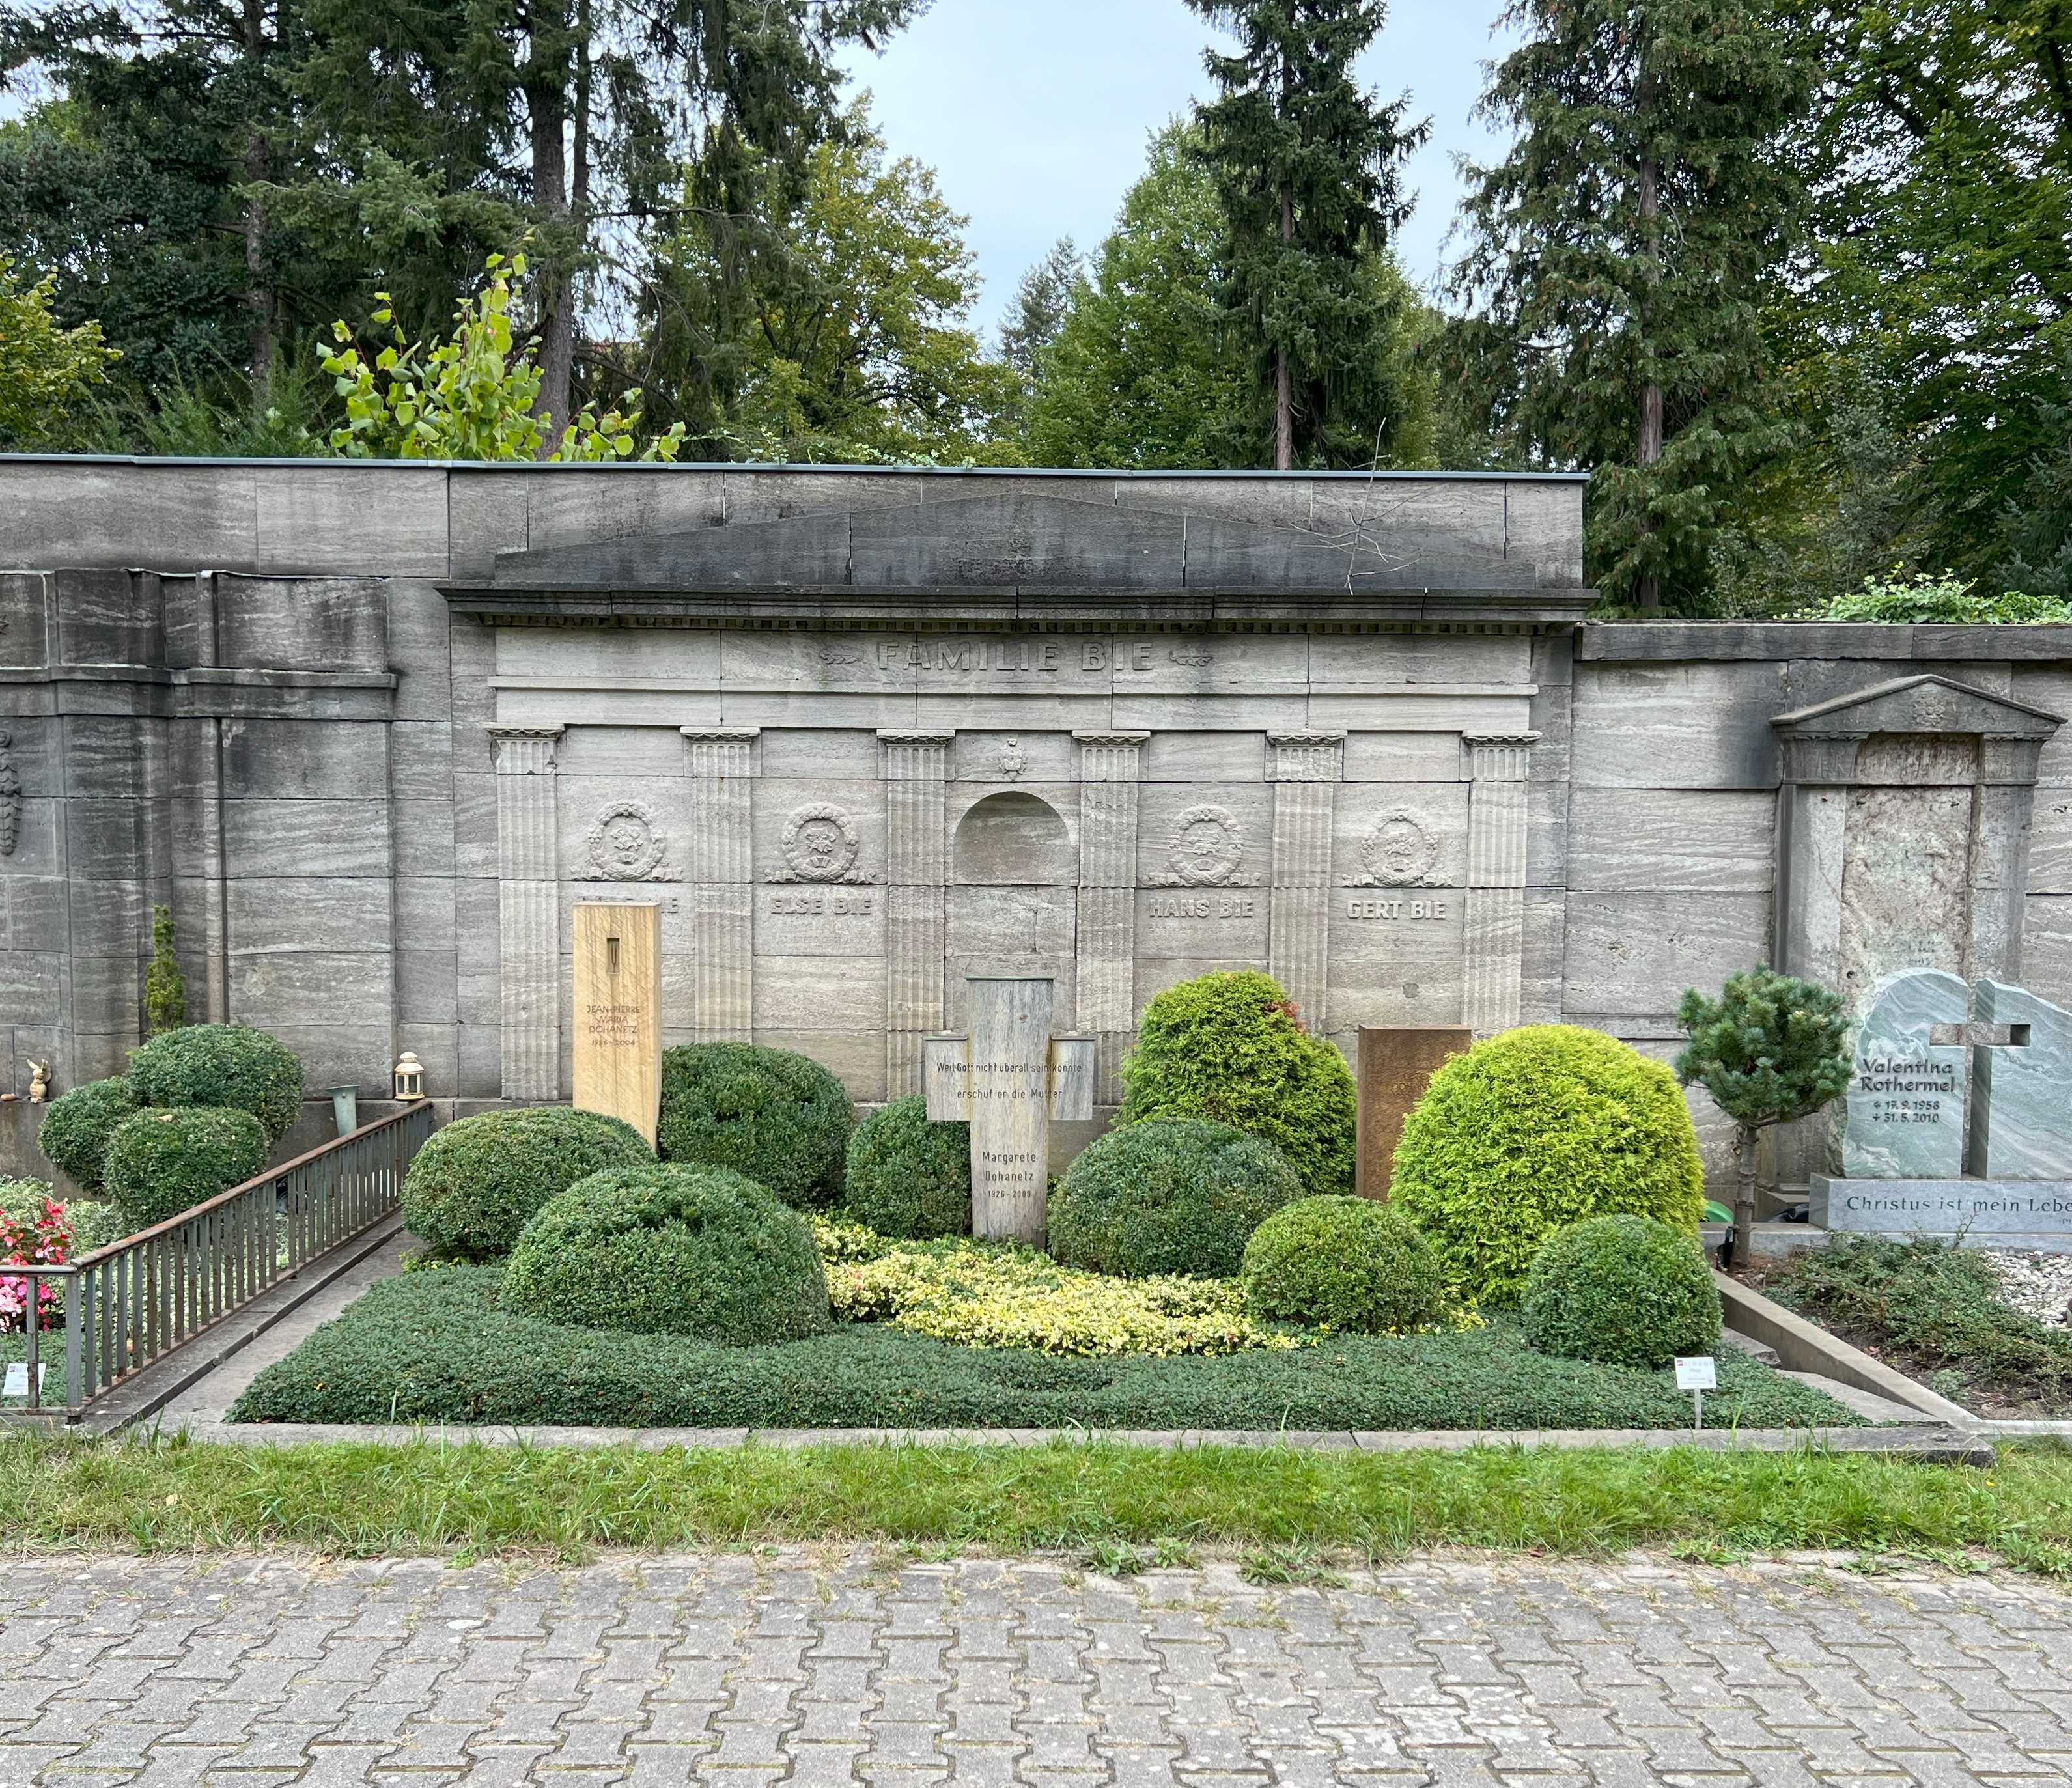 Grabstein Gert Bie, Friedhof Wilmersdorf, Berlin